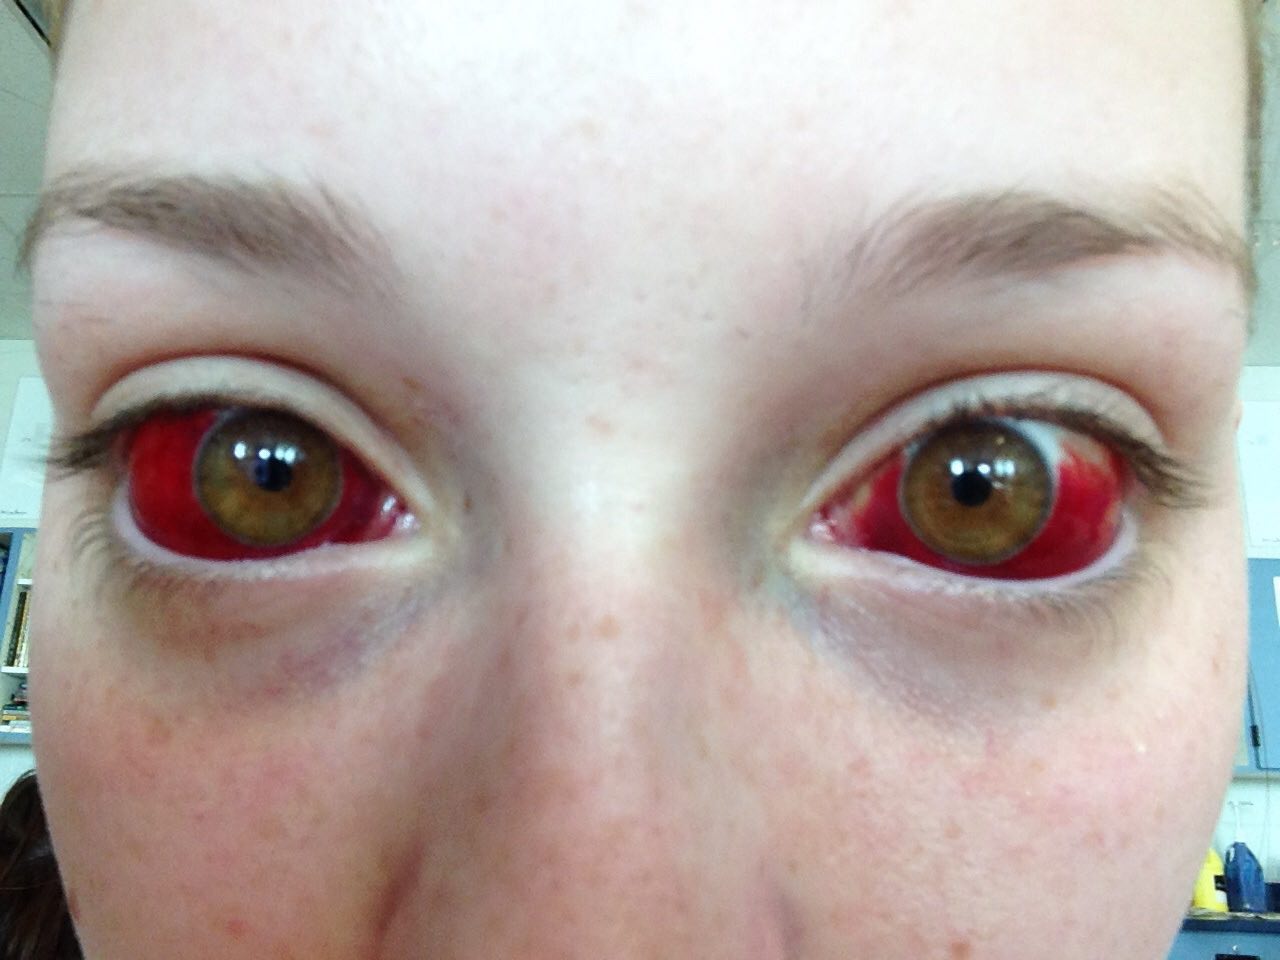 burst blood vessel in eye from vomiting - ..